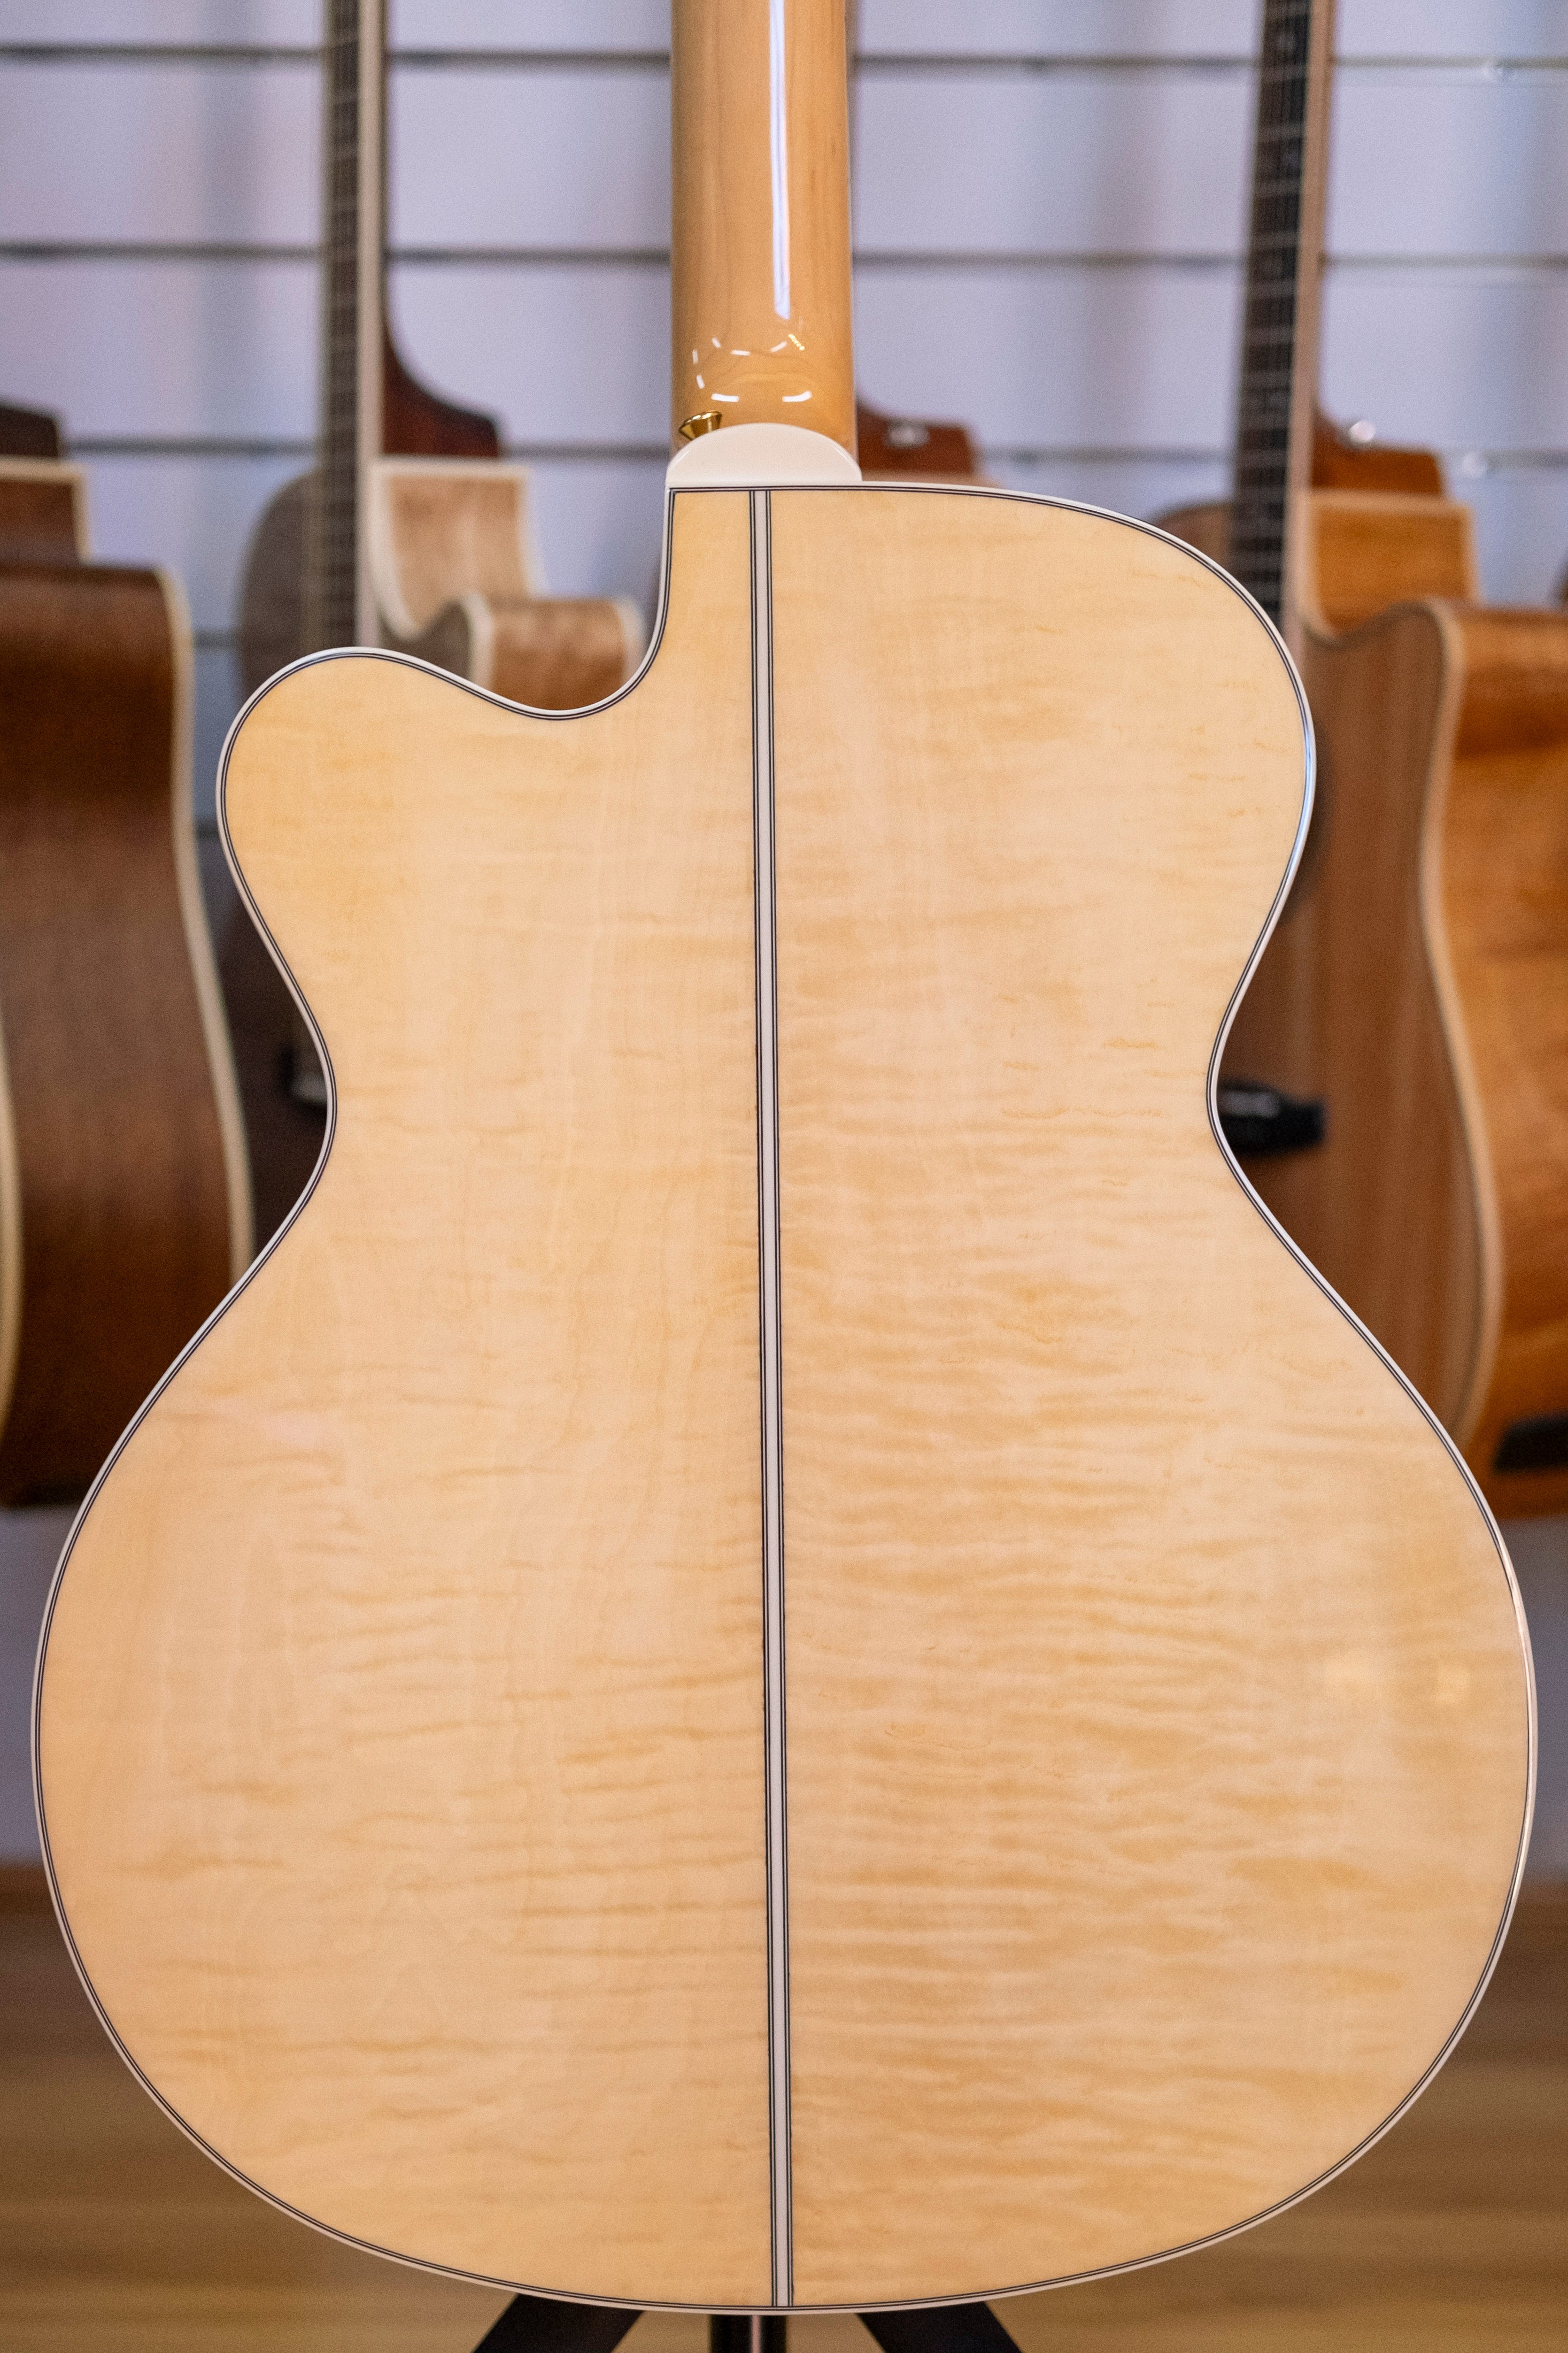 Takamine G70 Series Jumbo 12-String Acoustic Electric Guitar